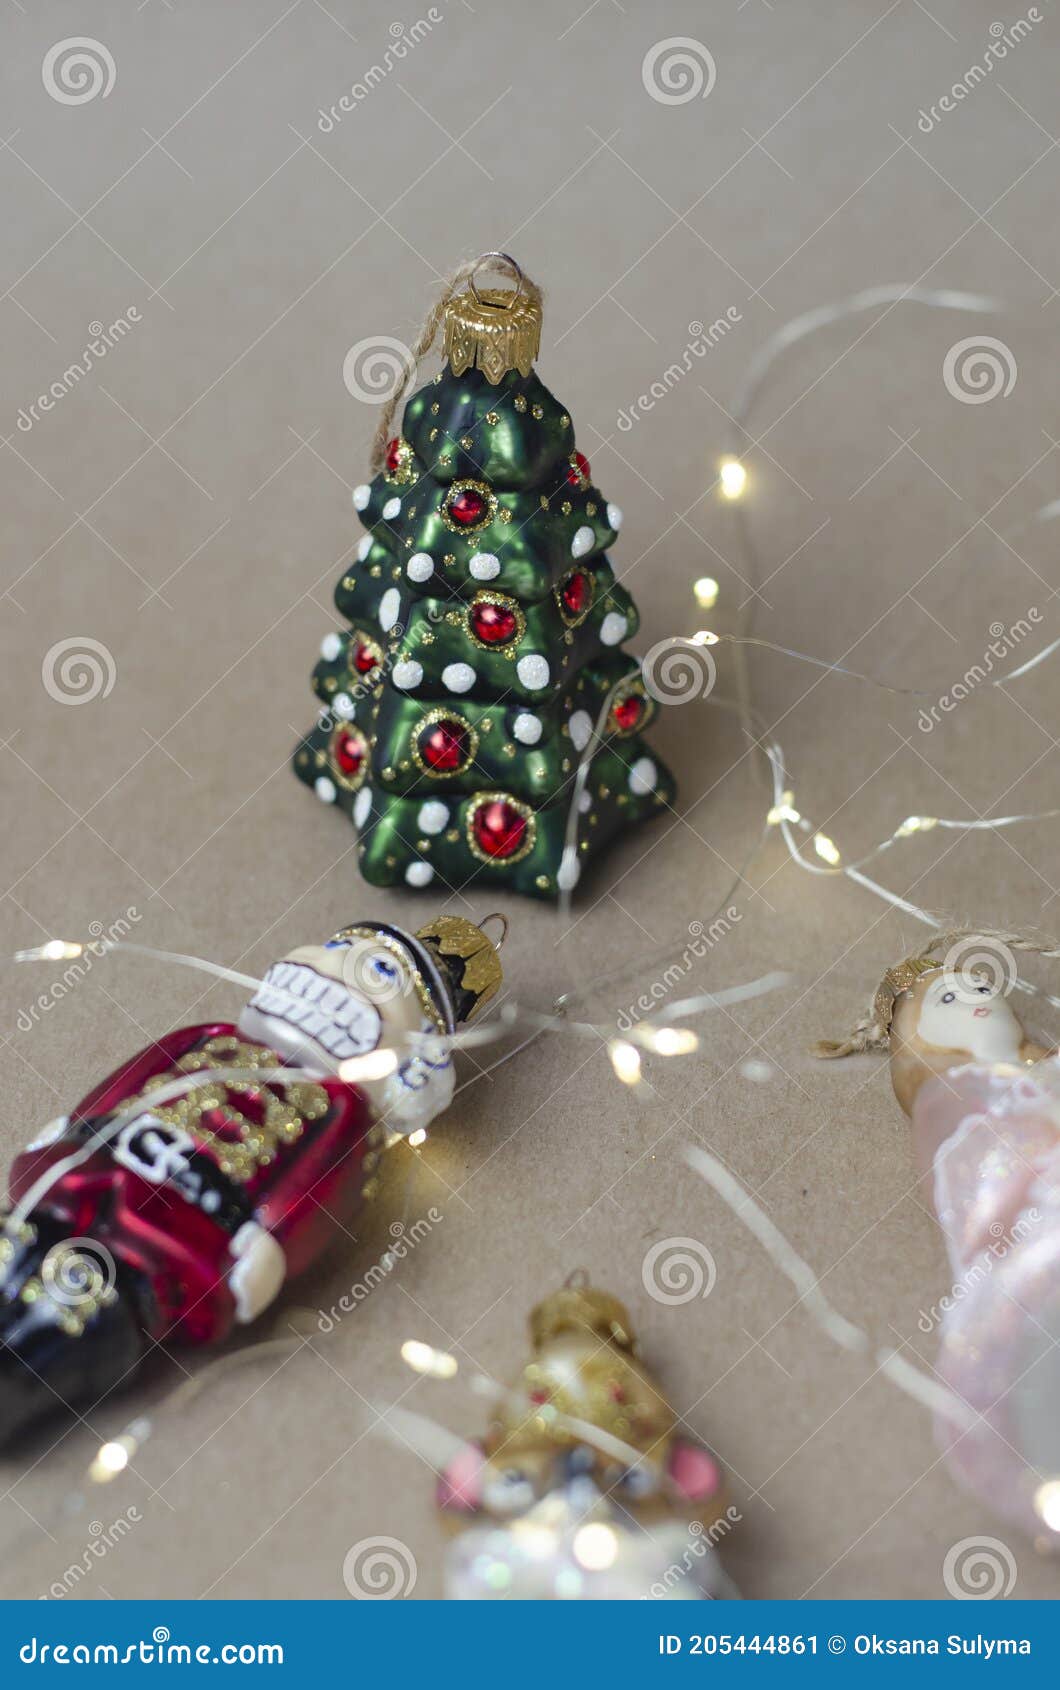 Vintage Christmas figurine house Xmas ornaments decoration Soviet Christmas silver ornament Toy glass tree retro decor Winter holiday